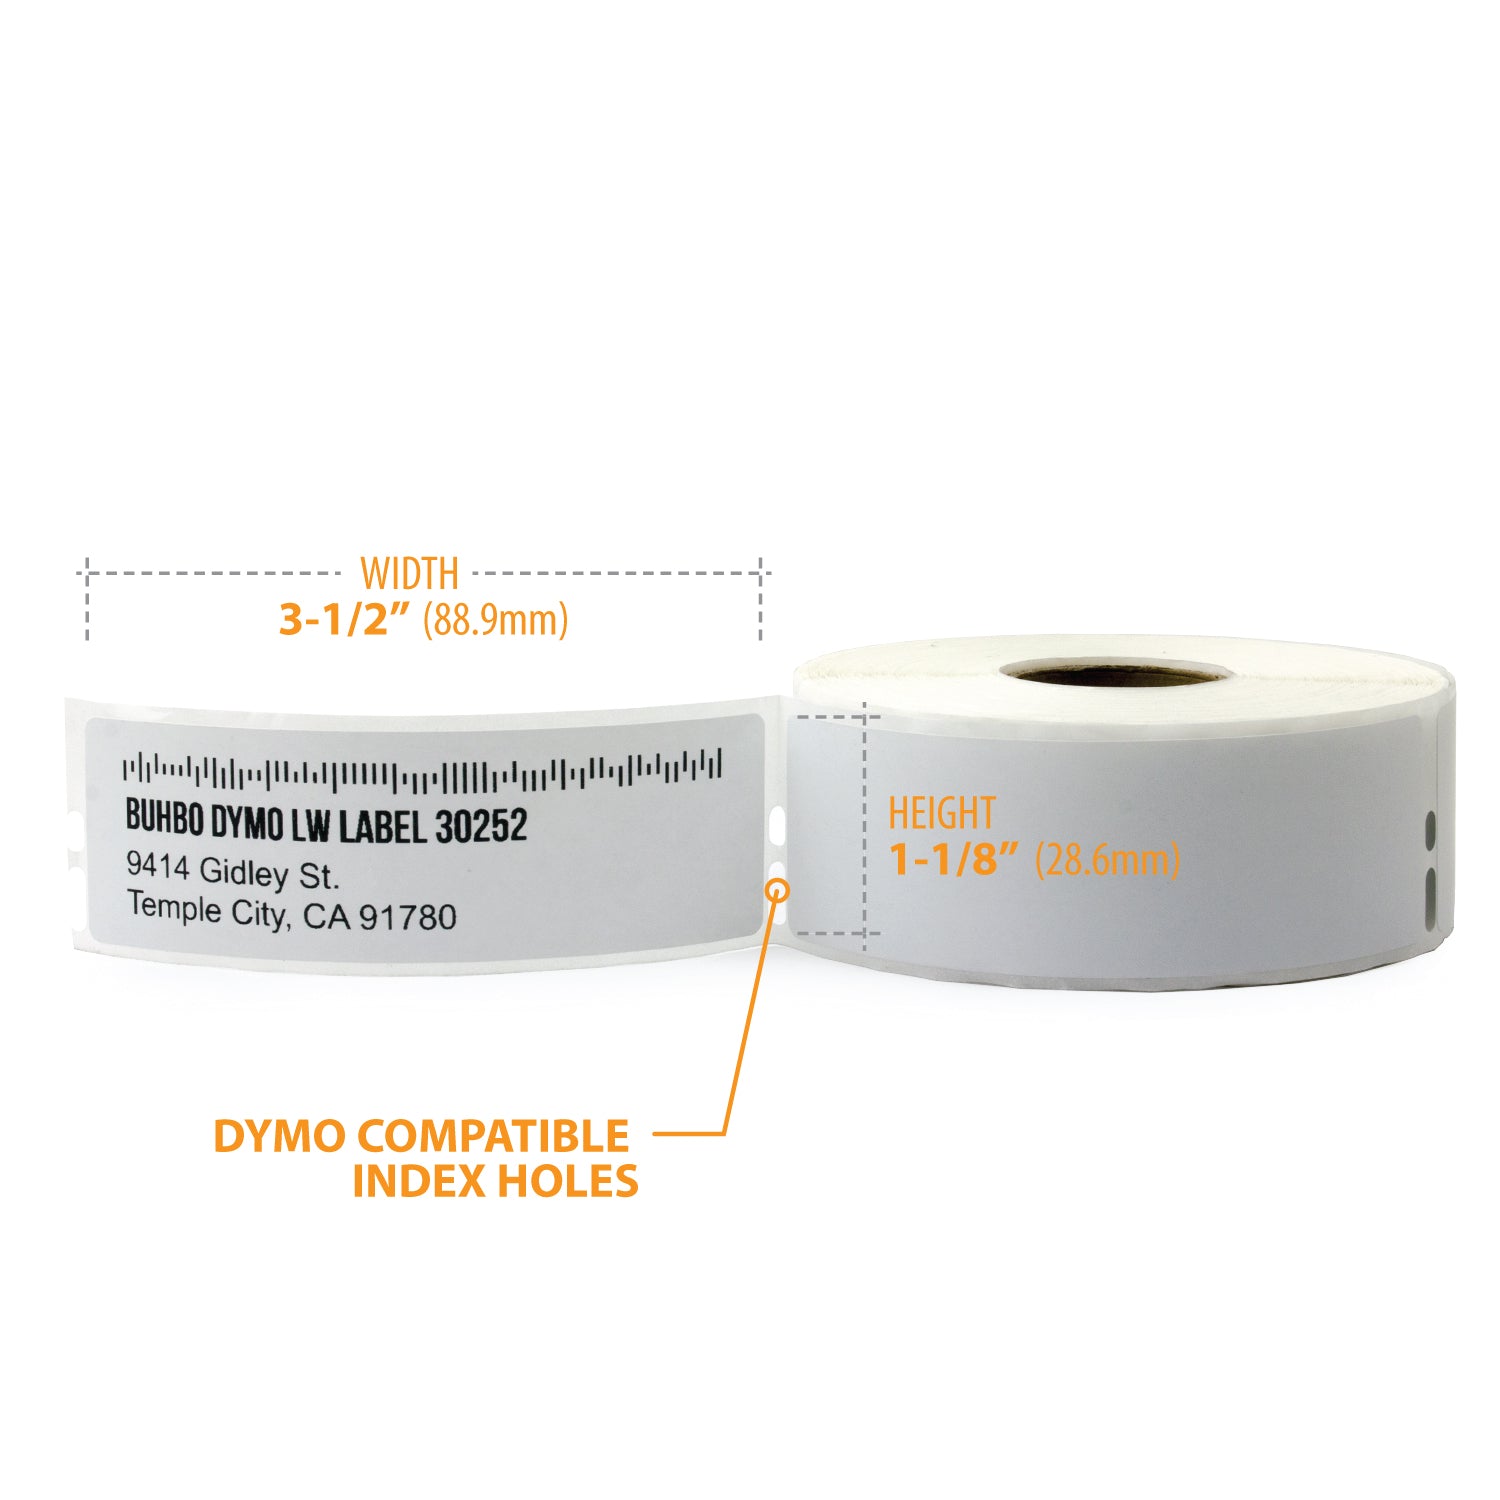 Dymo Compatible 30252 Address Labels 1 1/8 x 3 1/2